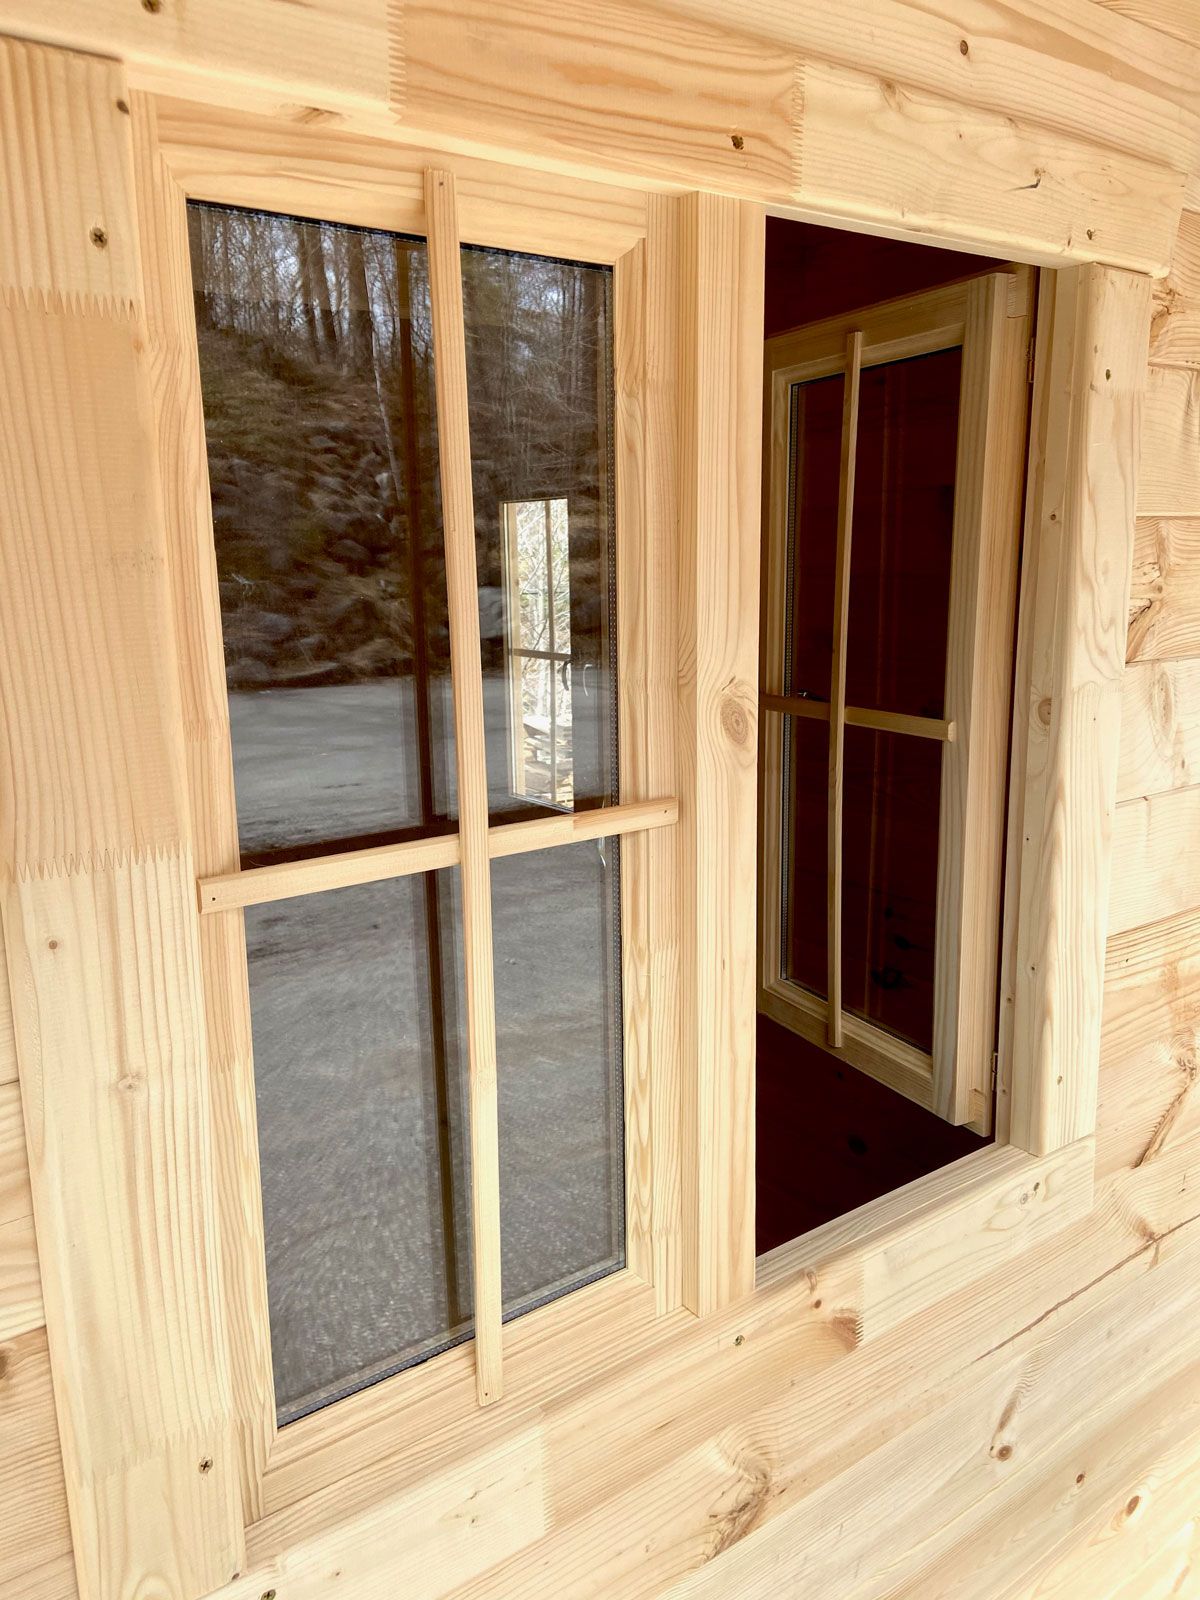 window opening inward in small cabin